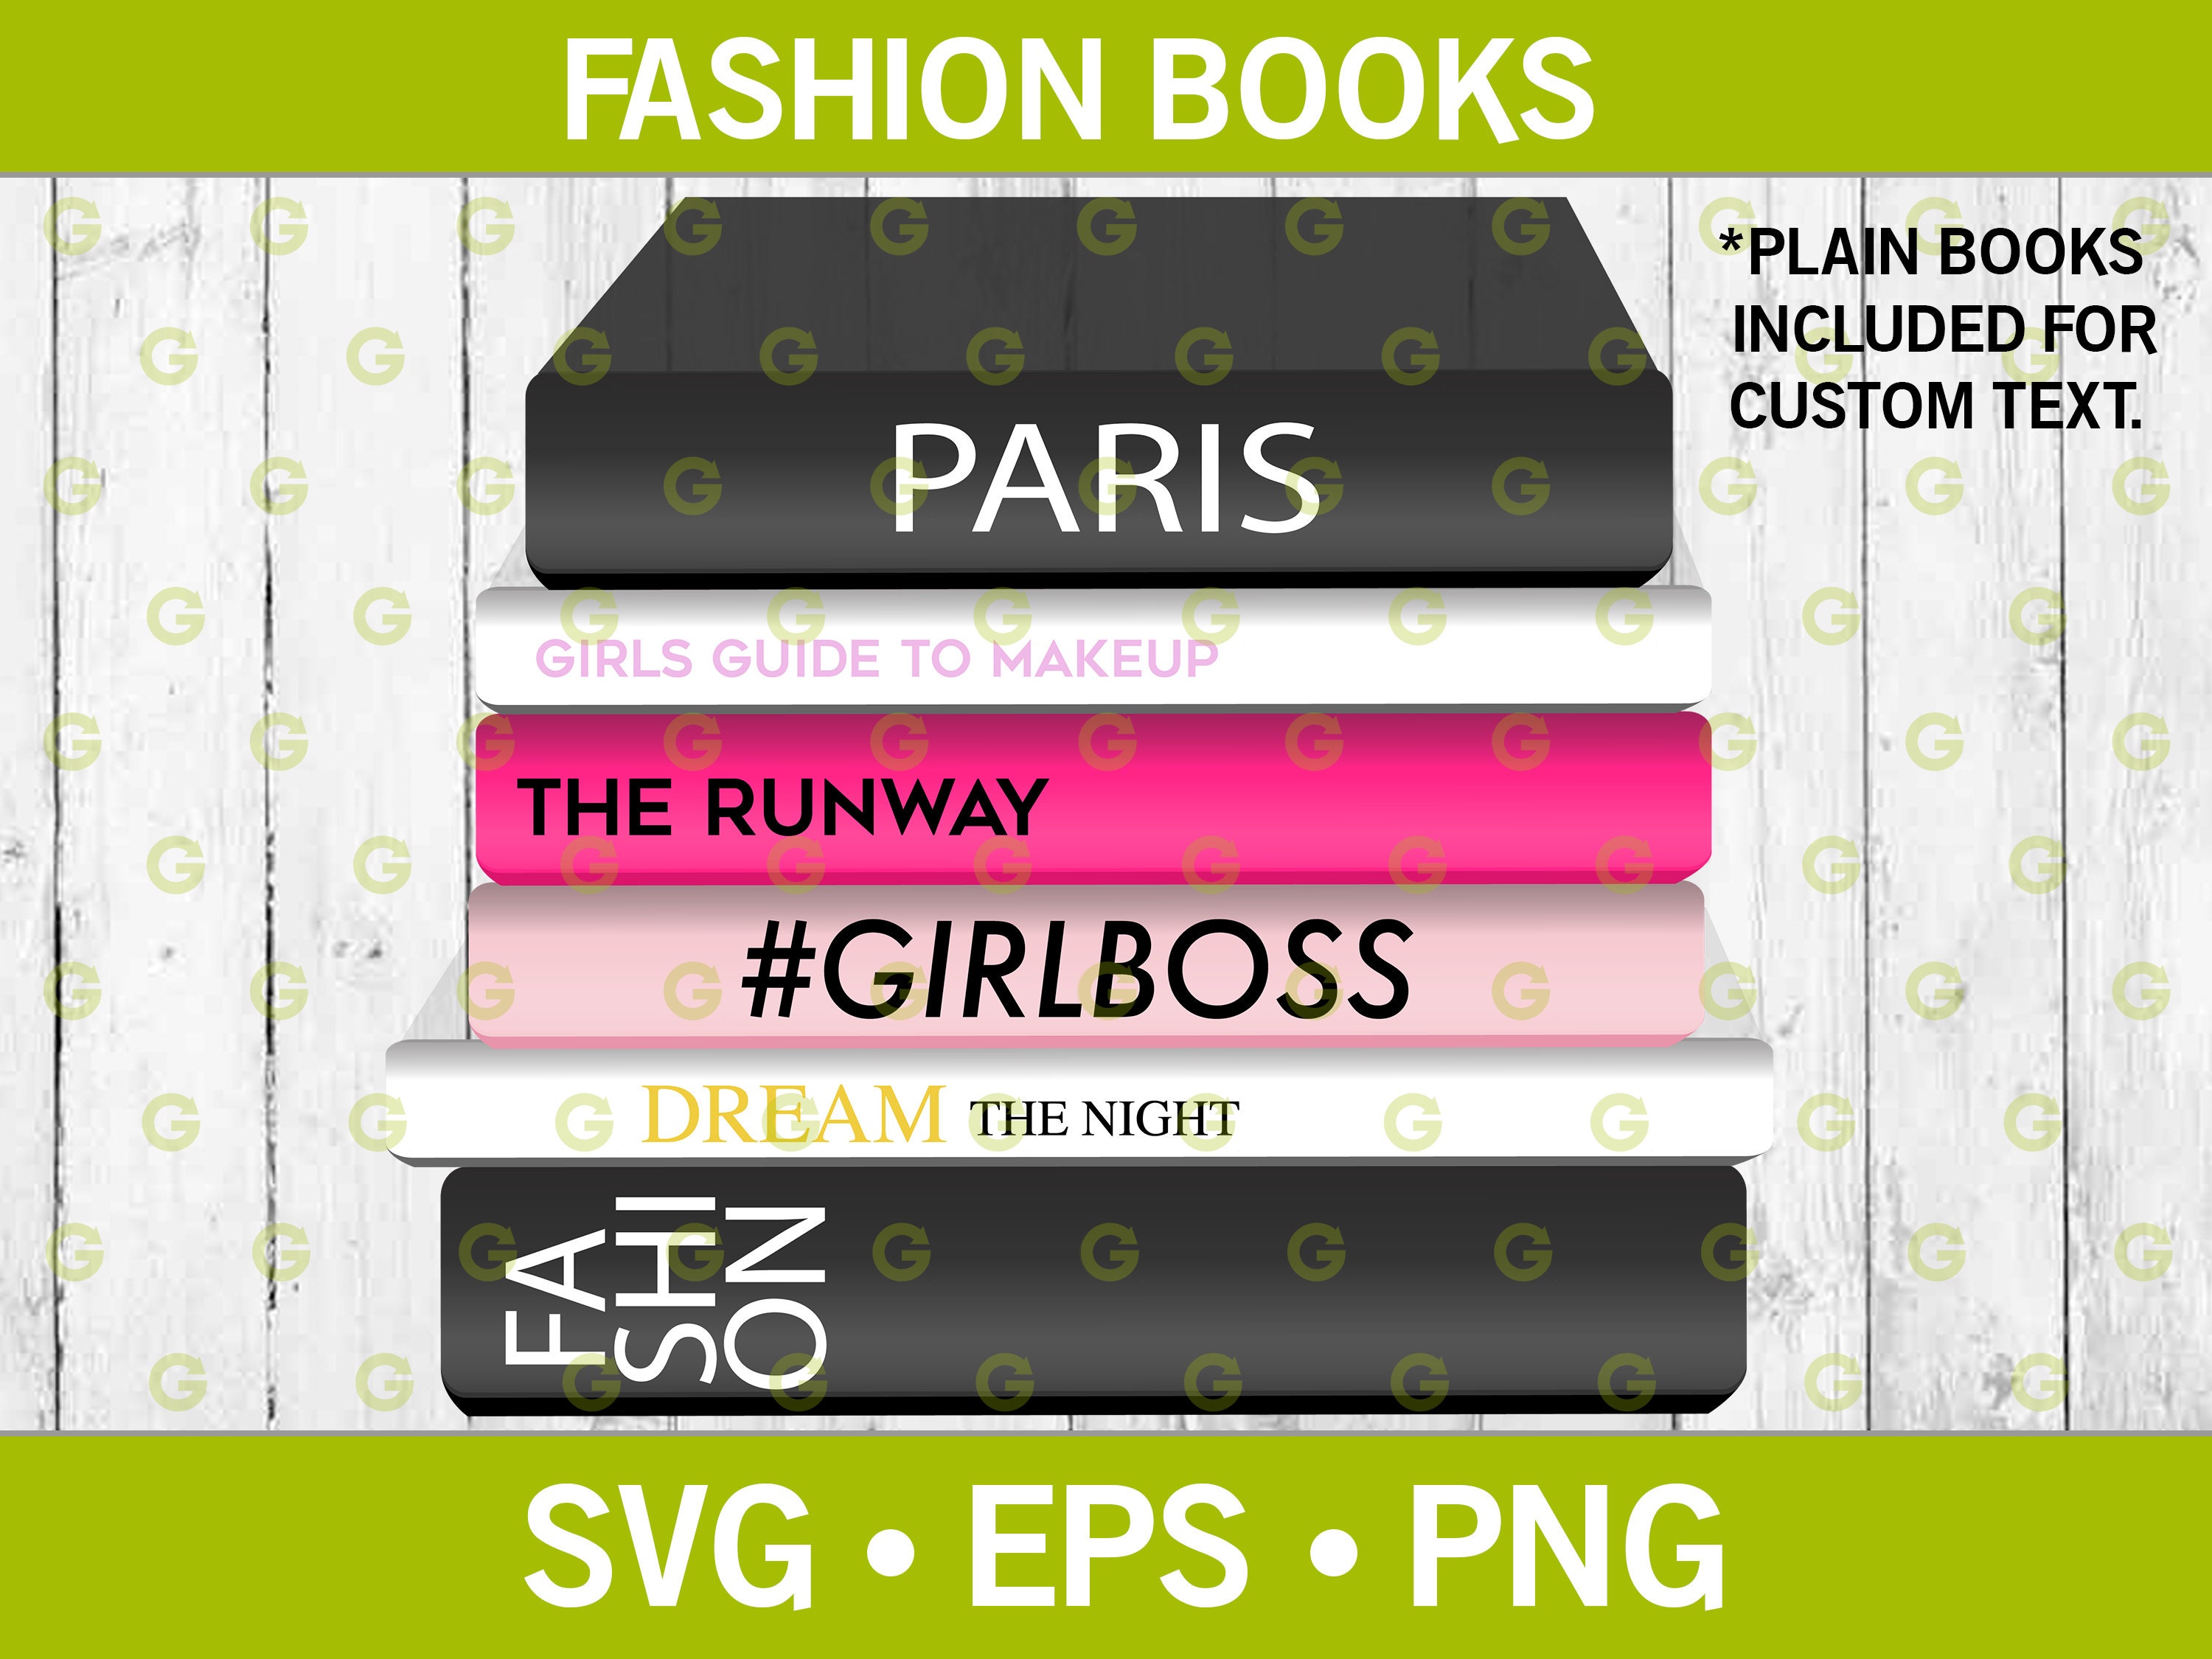 SellApp - Gucci, LV, Chanel, Christian Dior beautiful book covers